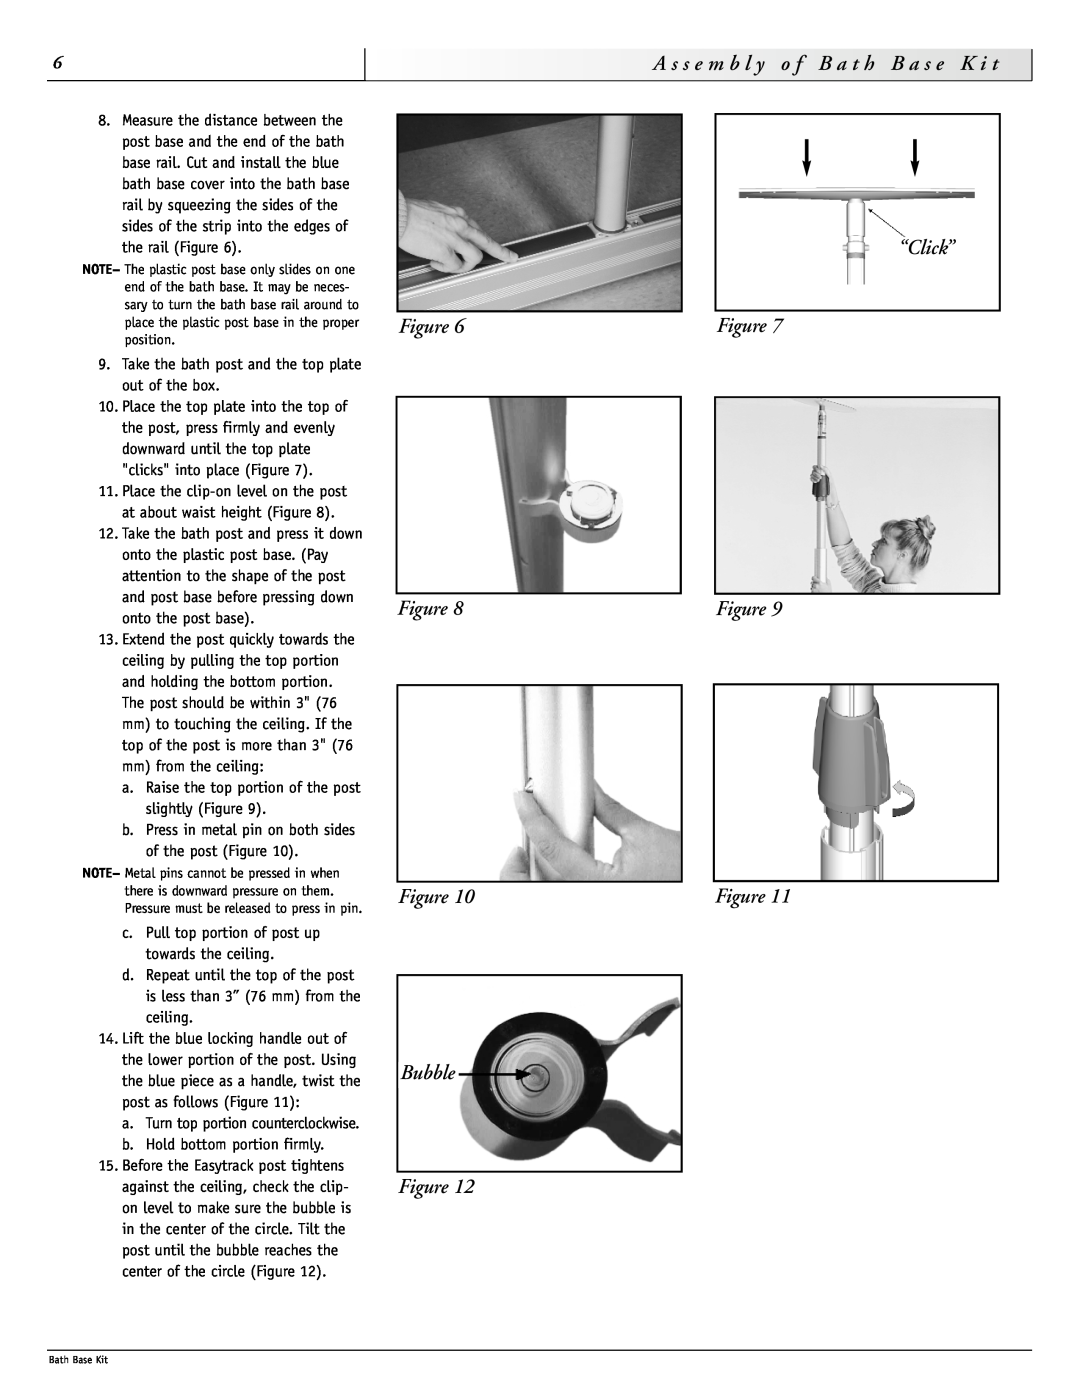 Sunrise Medical 900-0880 instruction manual A s s e m b l y o f B a t h B a s e K i t, Figure Figure Figure Bubble Figure 